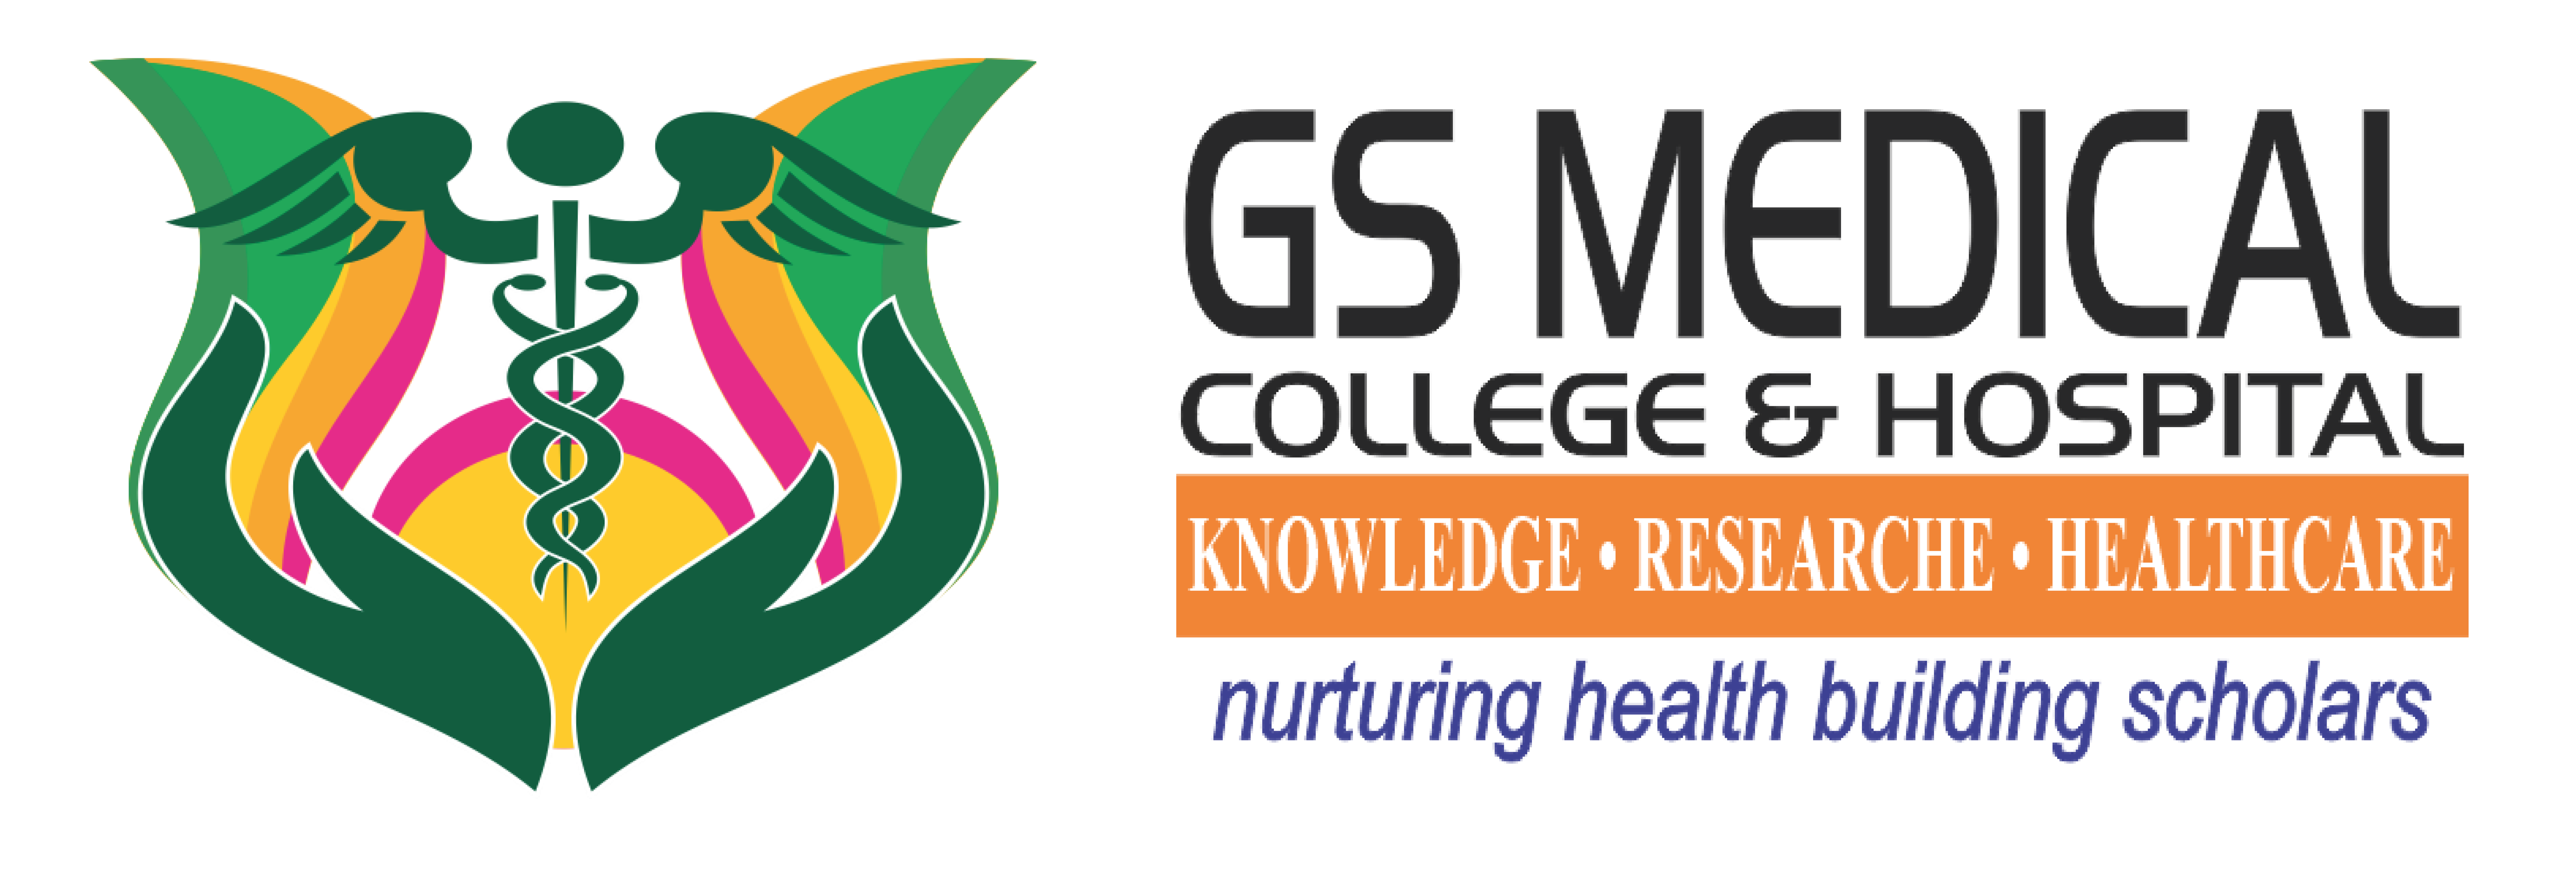 GS Medical College & Hospital logo